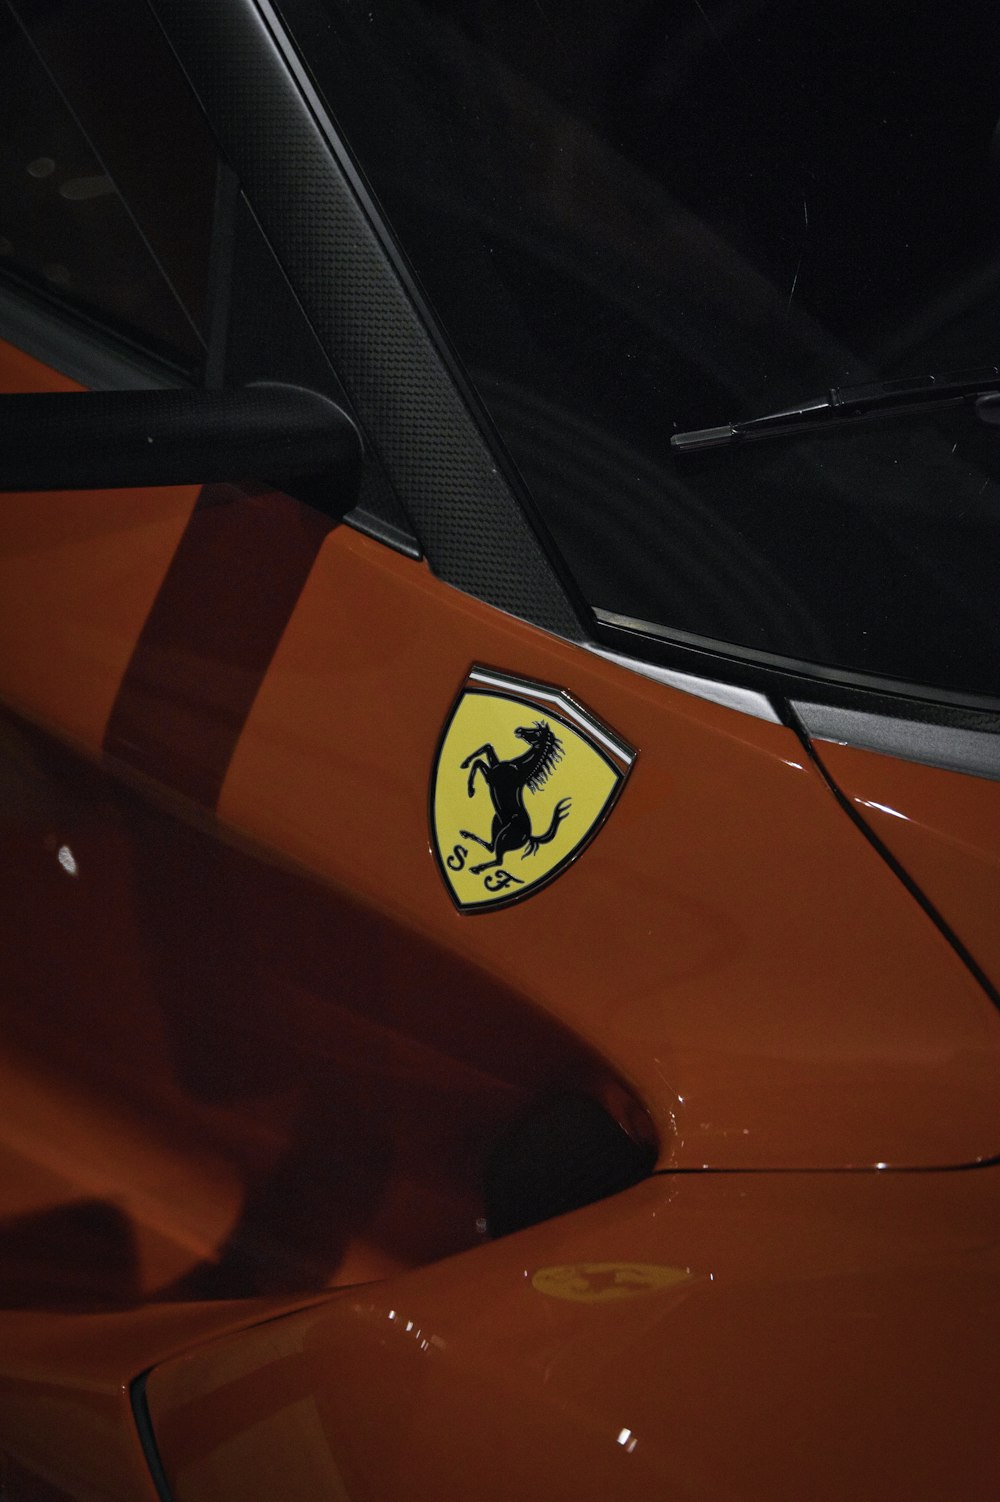 a close up of a ferrari logo on a car